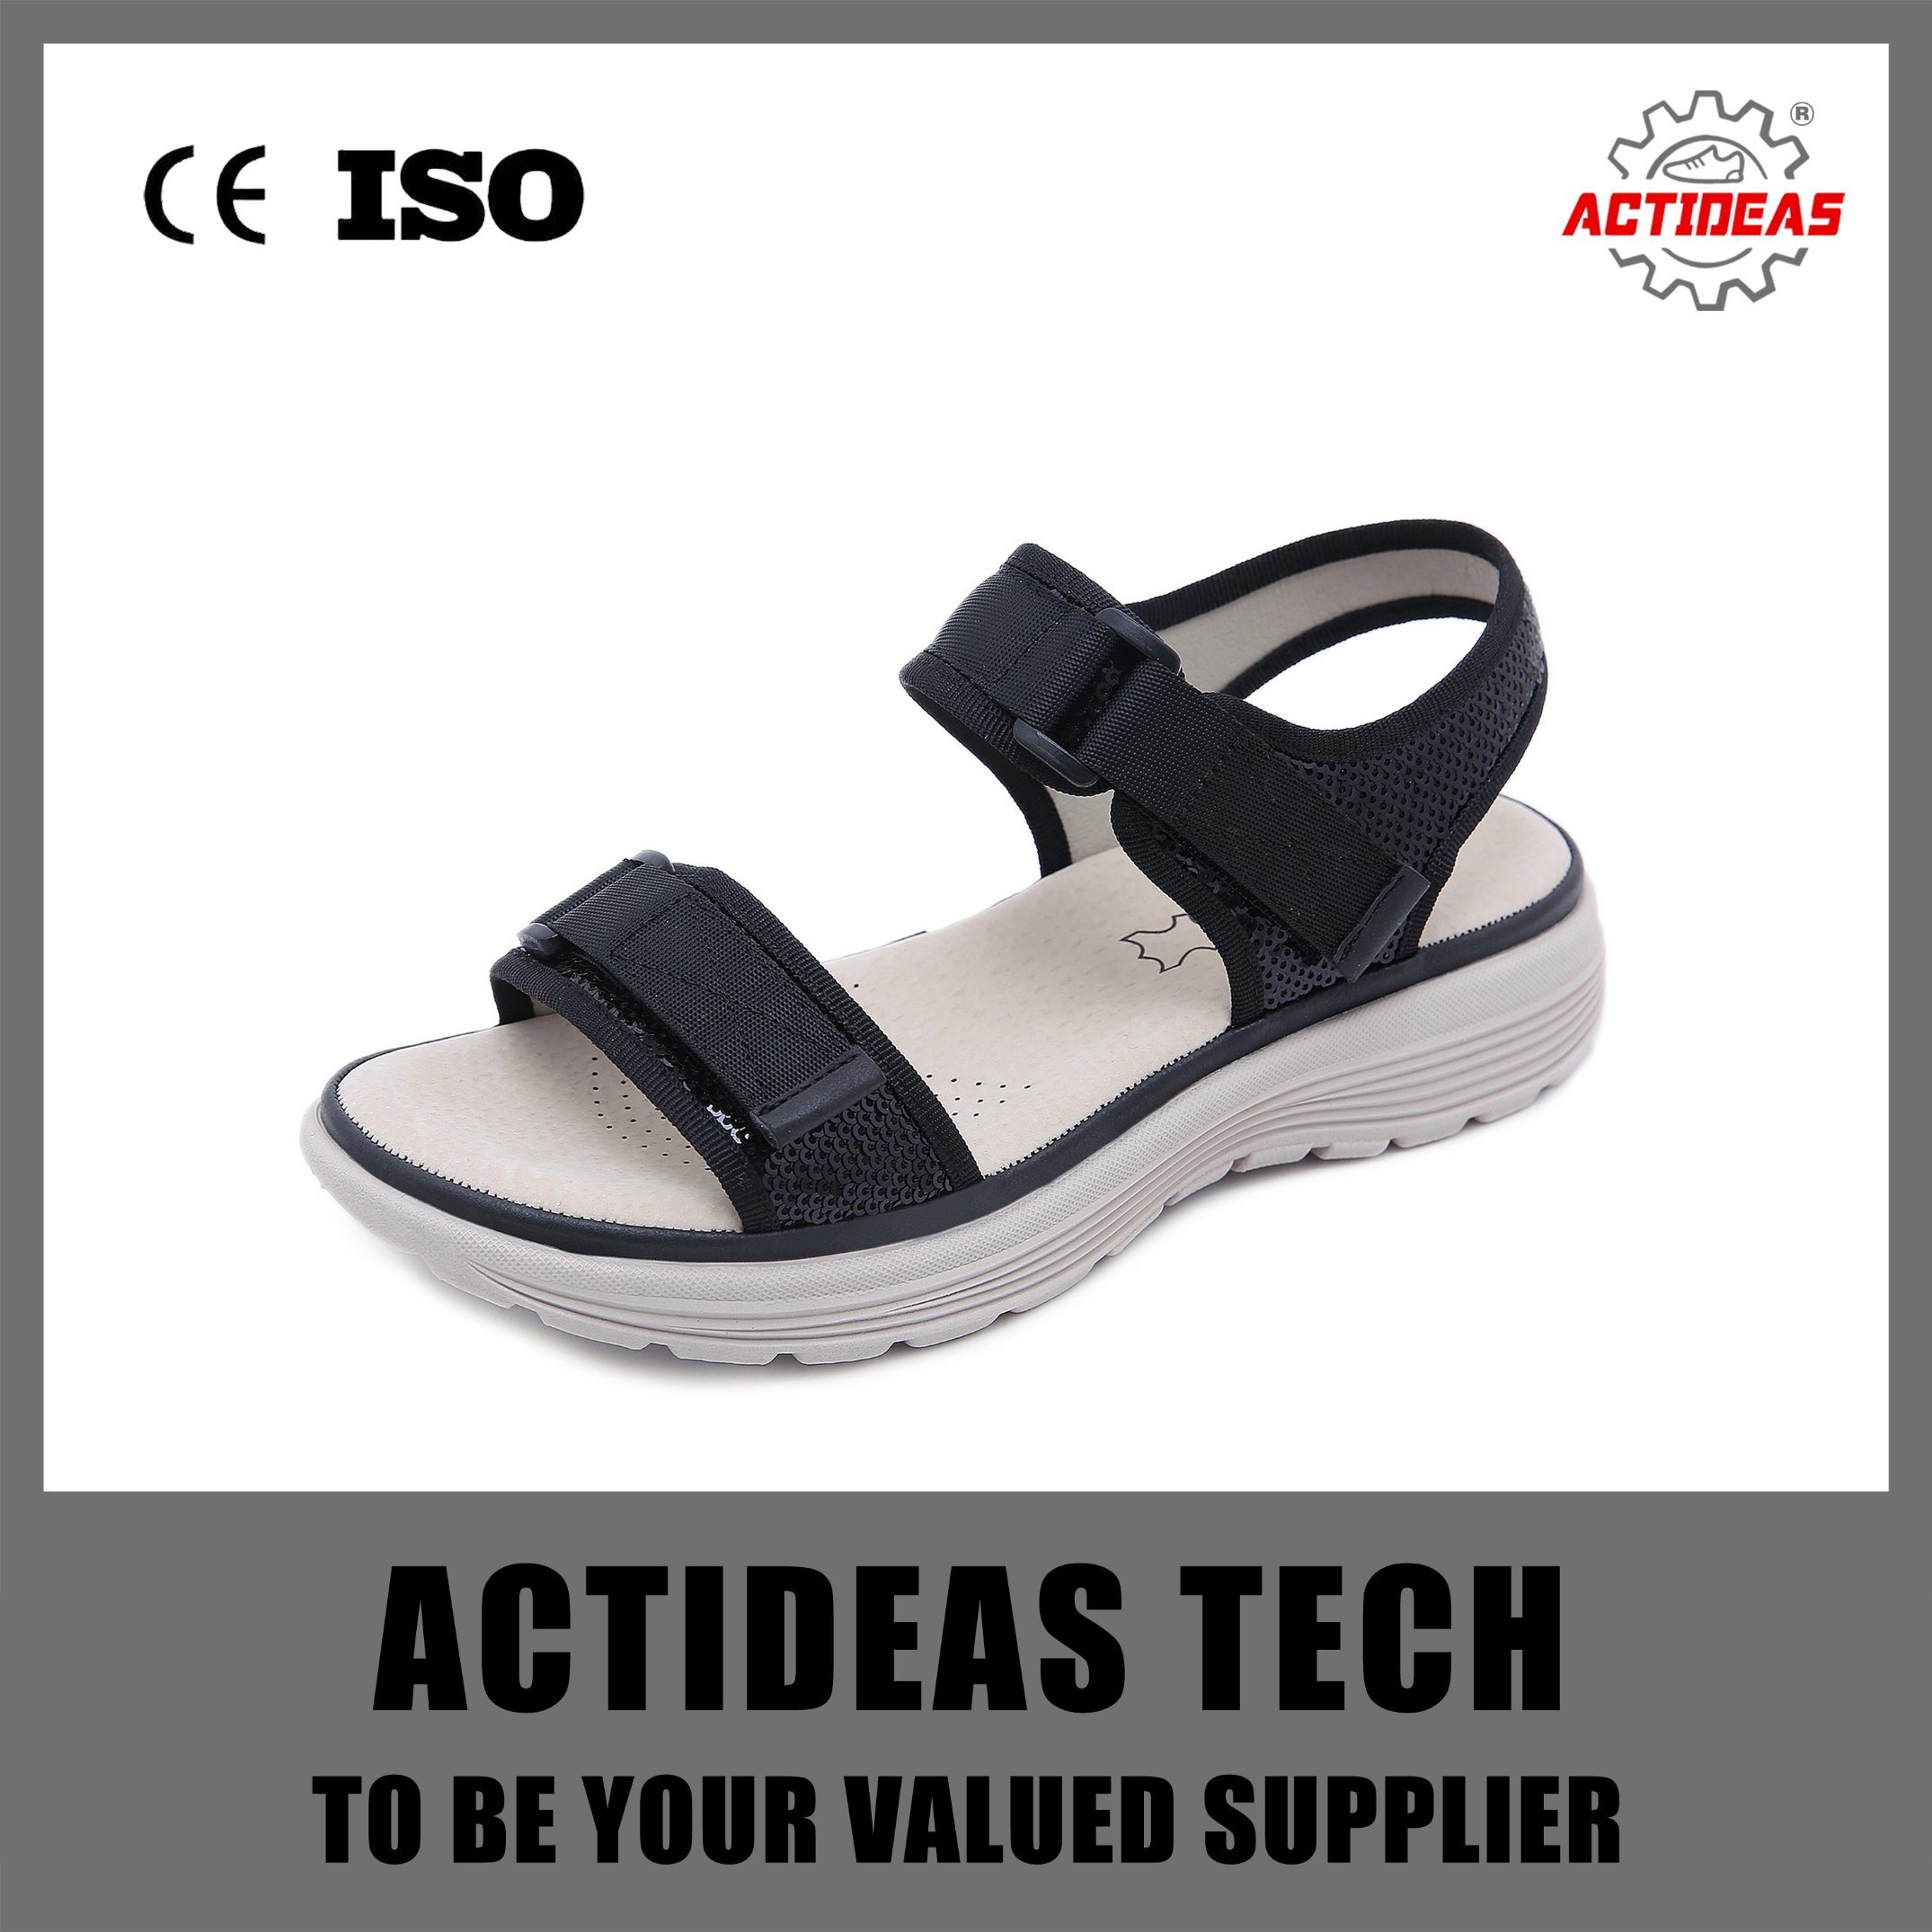 Ladies Adjustable Straps Slide Sandals Comfort with Concealed Support Water Resistant Wedge Sandals